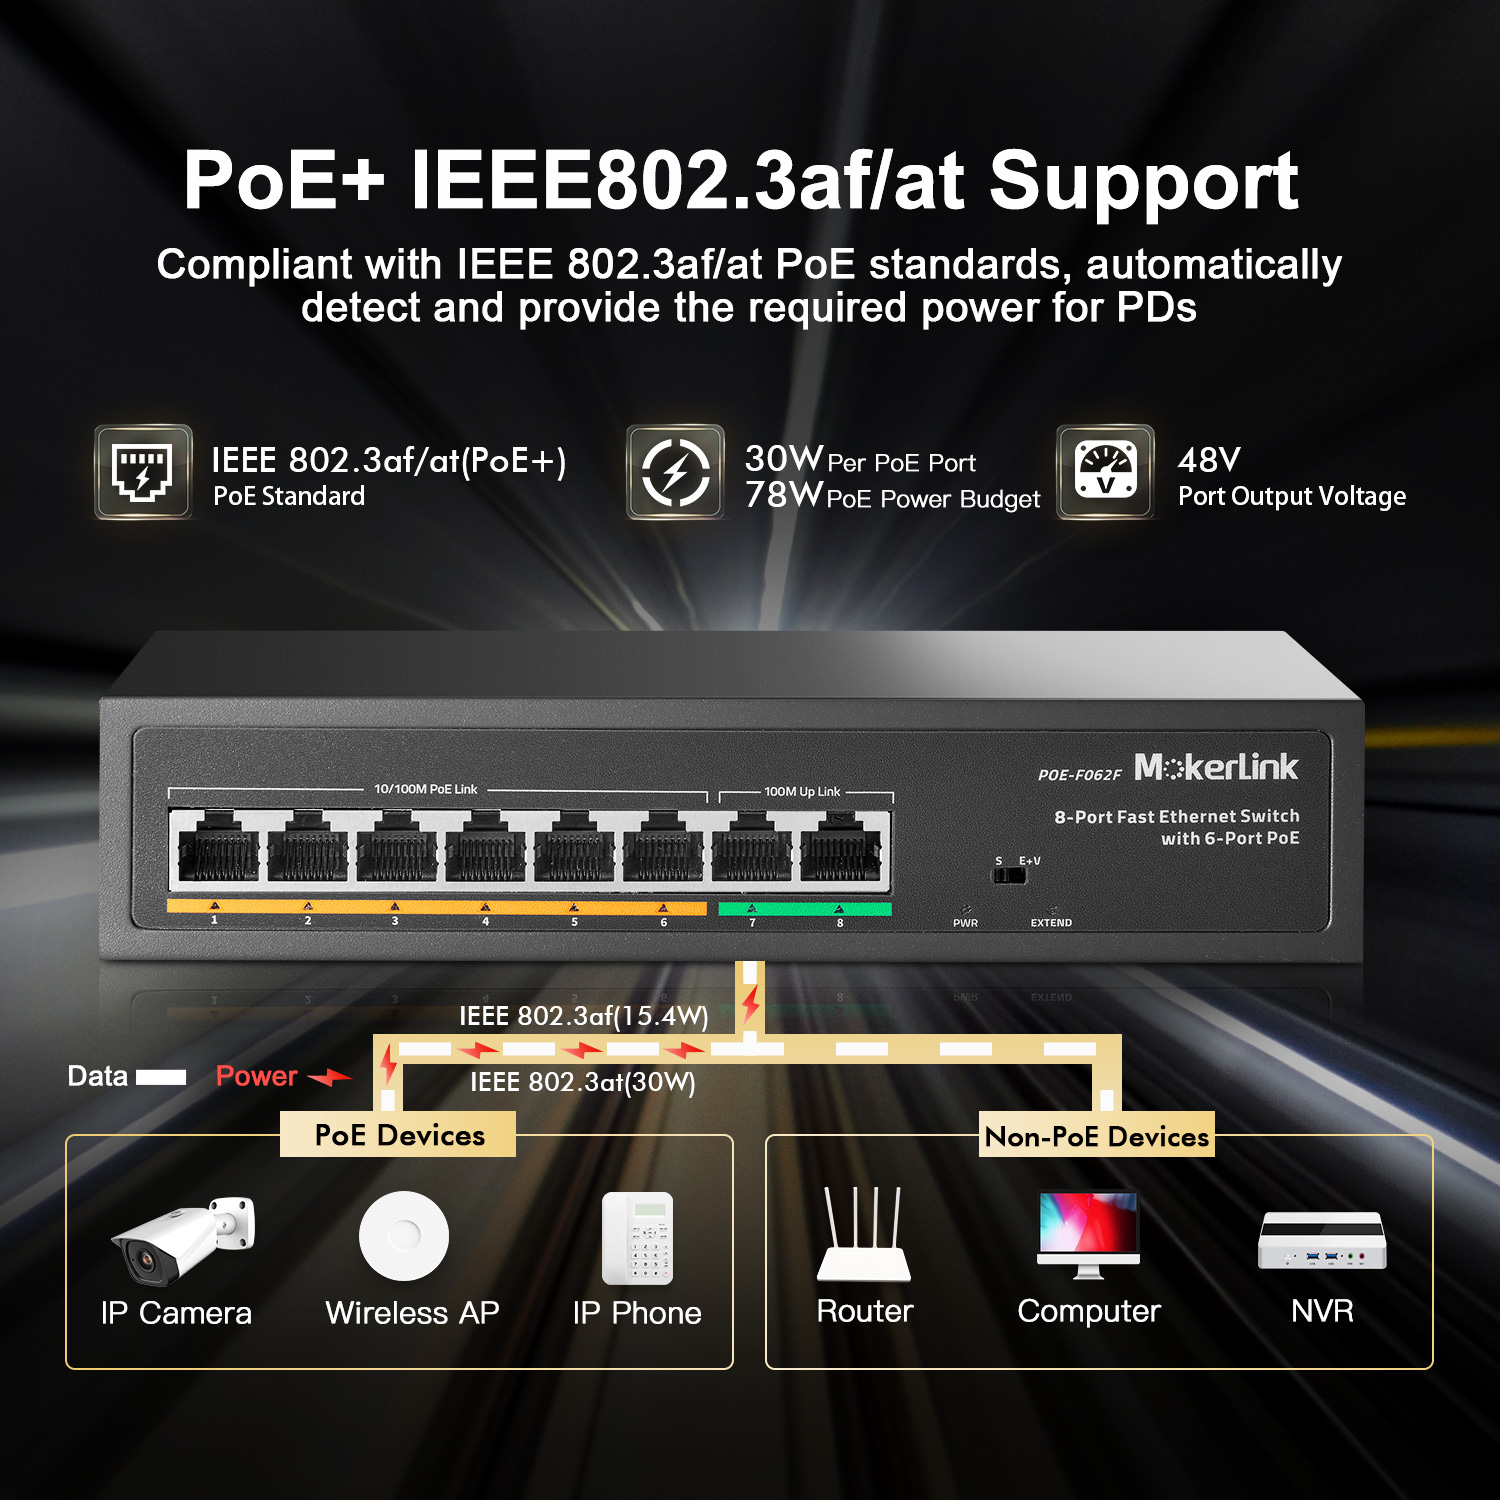 8 port Gigabit Ethernet Switch with PoE, Matte Grey